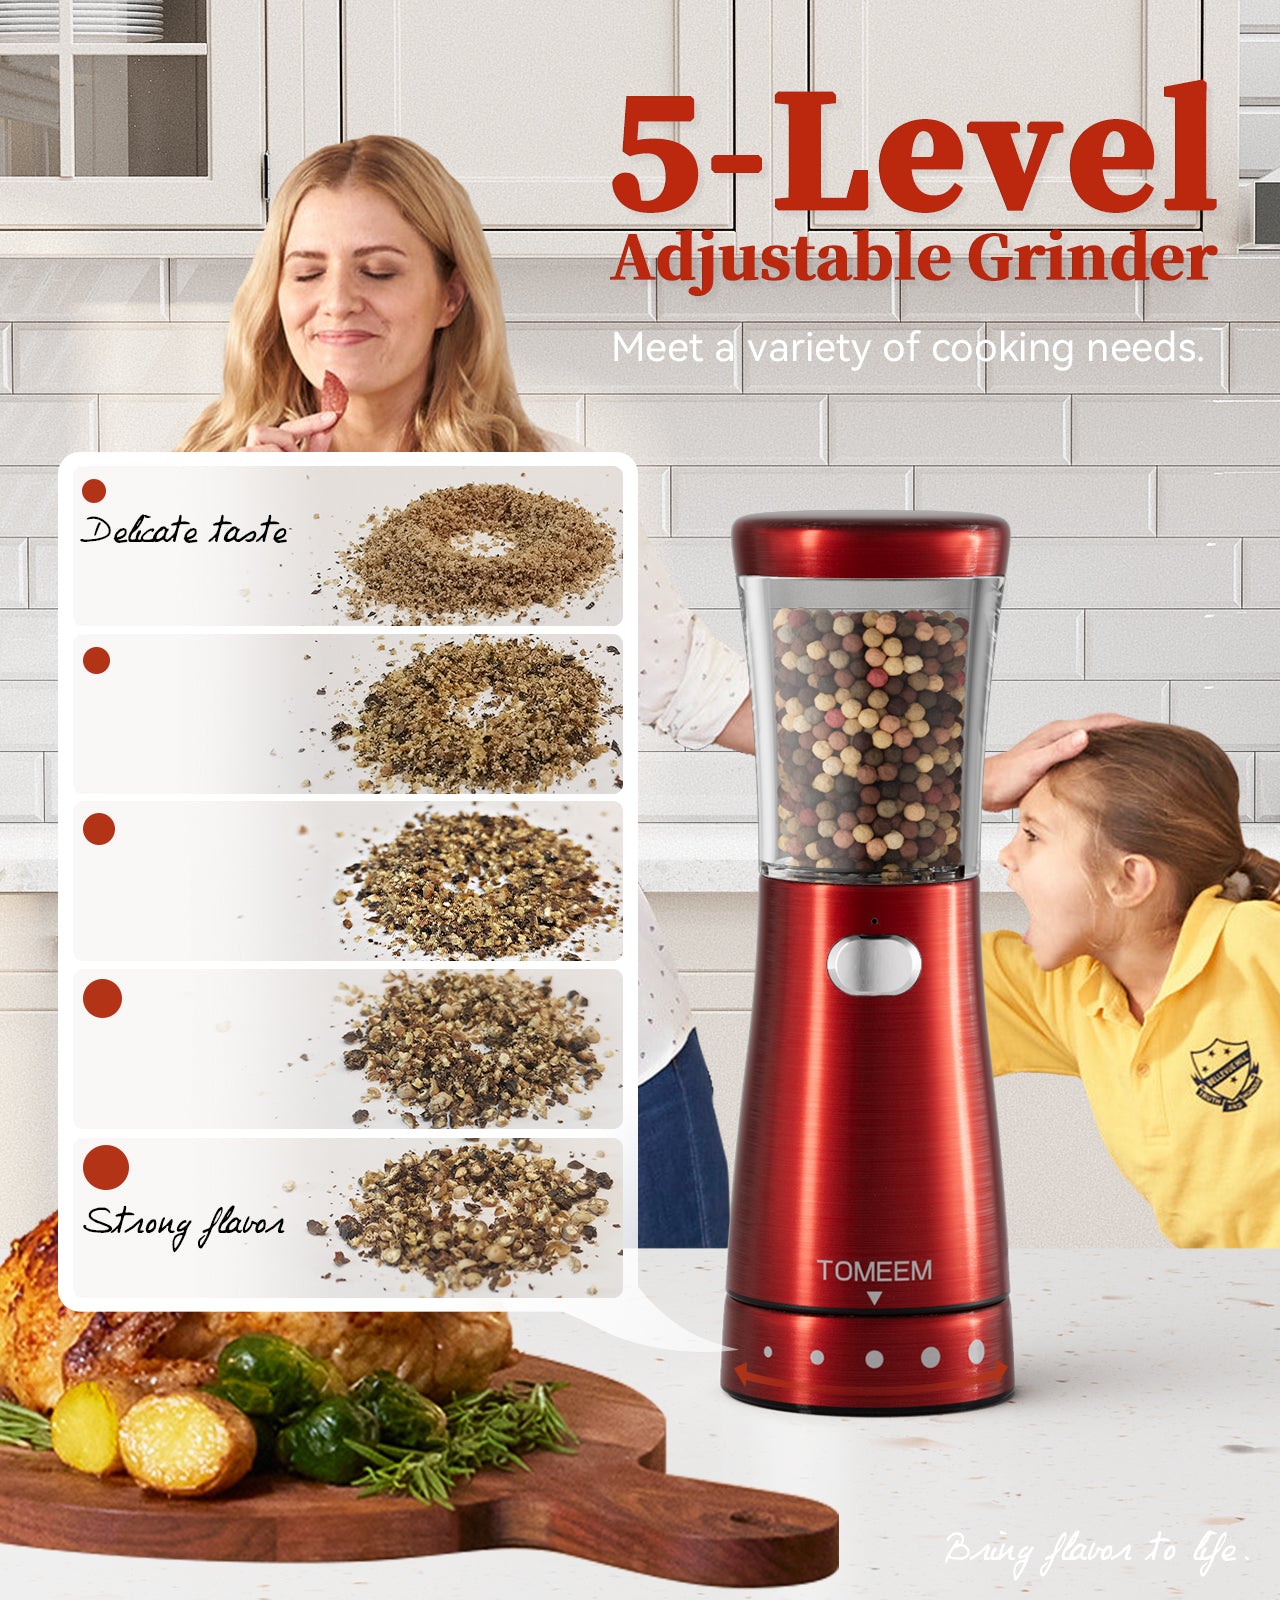 electric-salt-and-pepper-grinder-bright-red